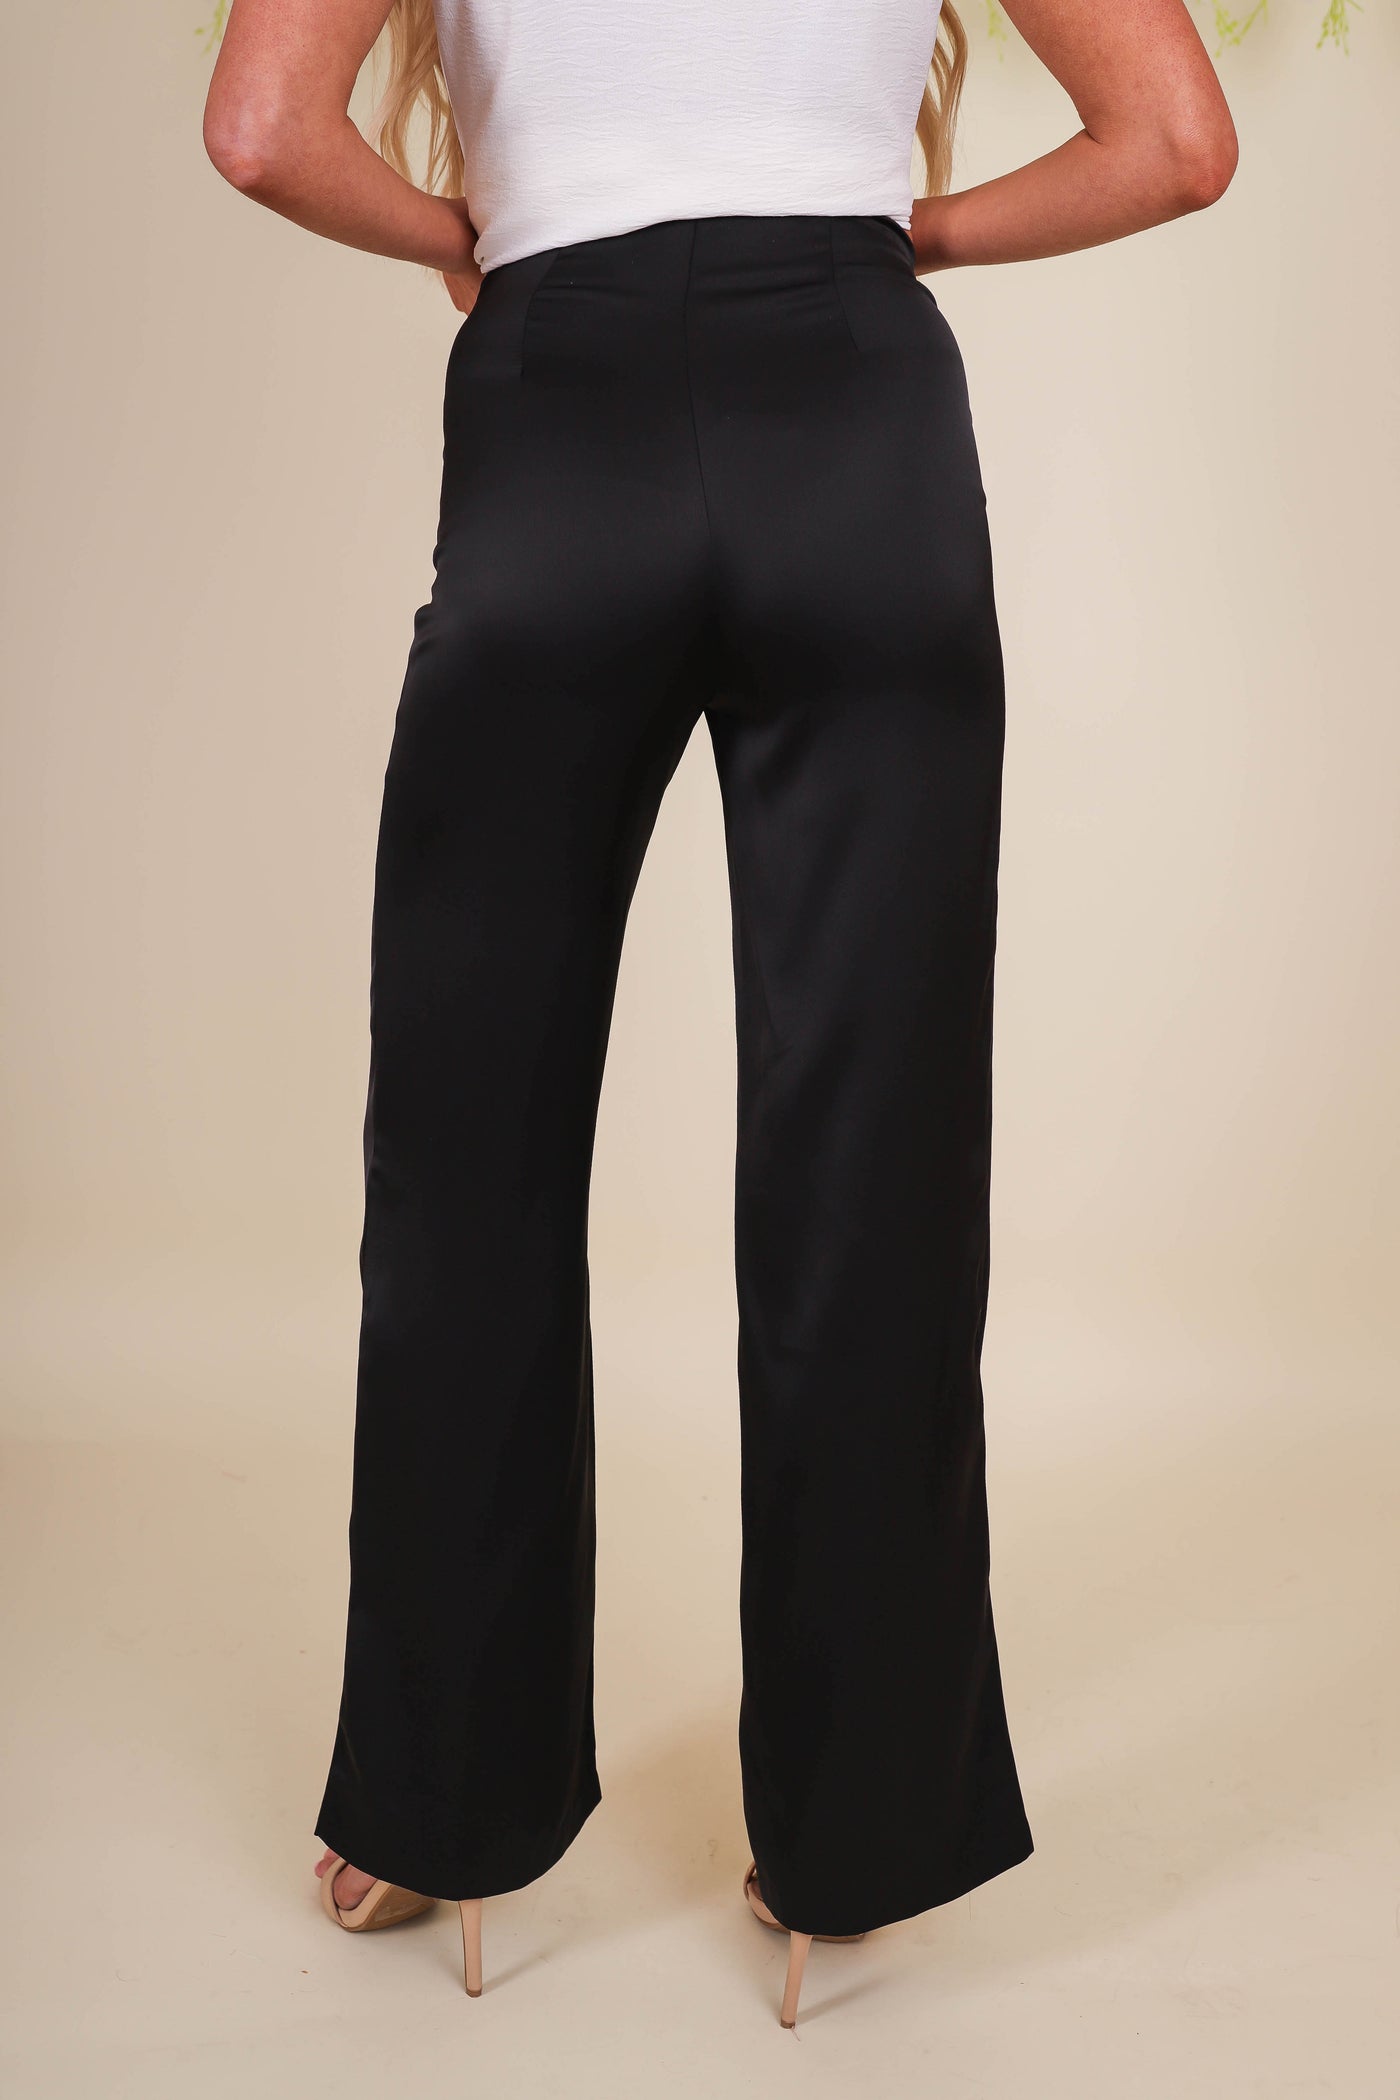 Black Satin Wide Leg Pants- Women's Satin Pants- GLAM Black Satin Pants